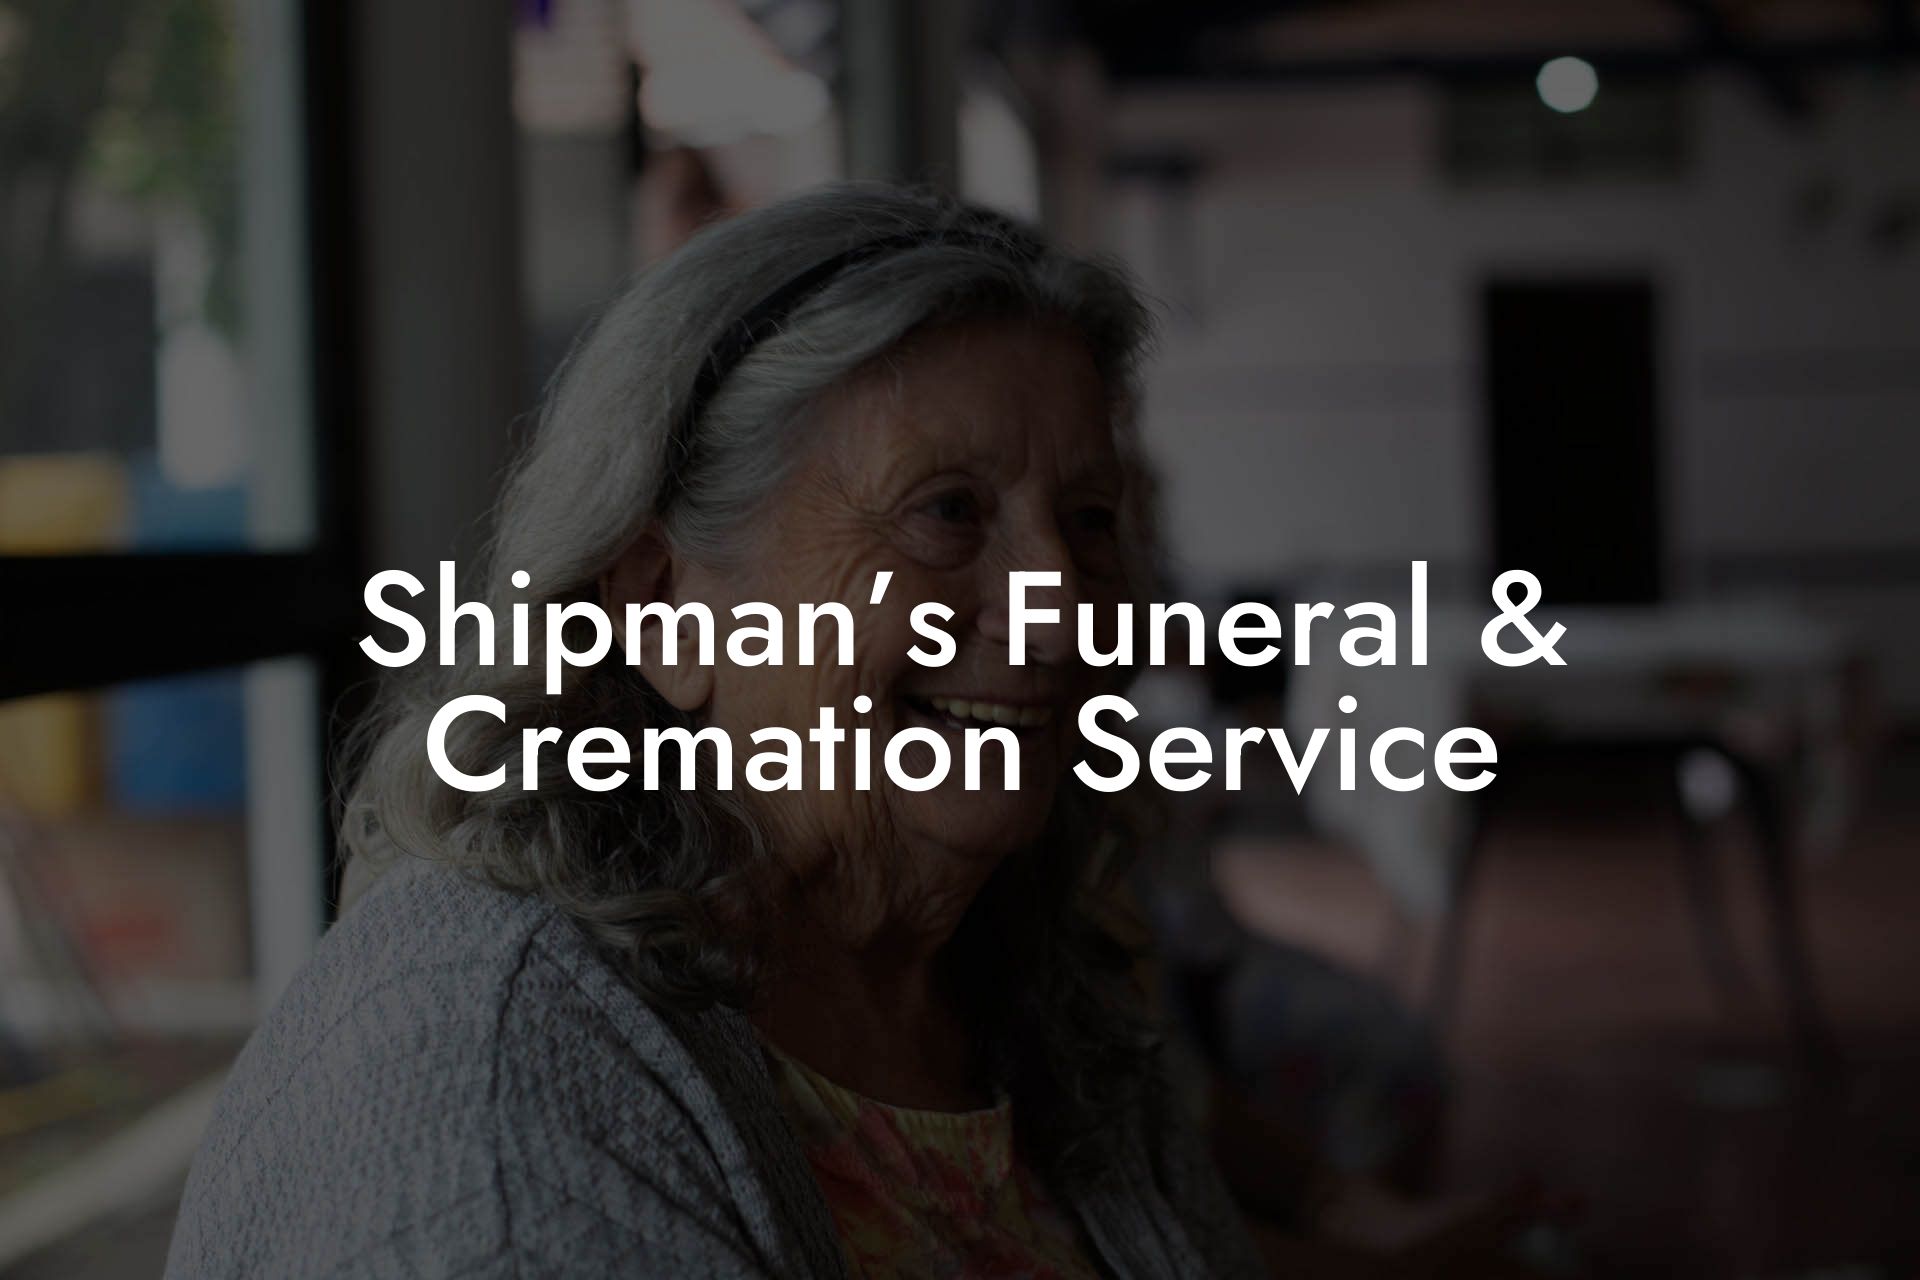 Shipman’s Funeral & Cremation Service